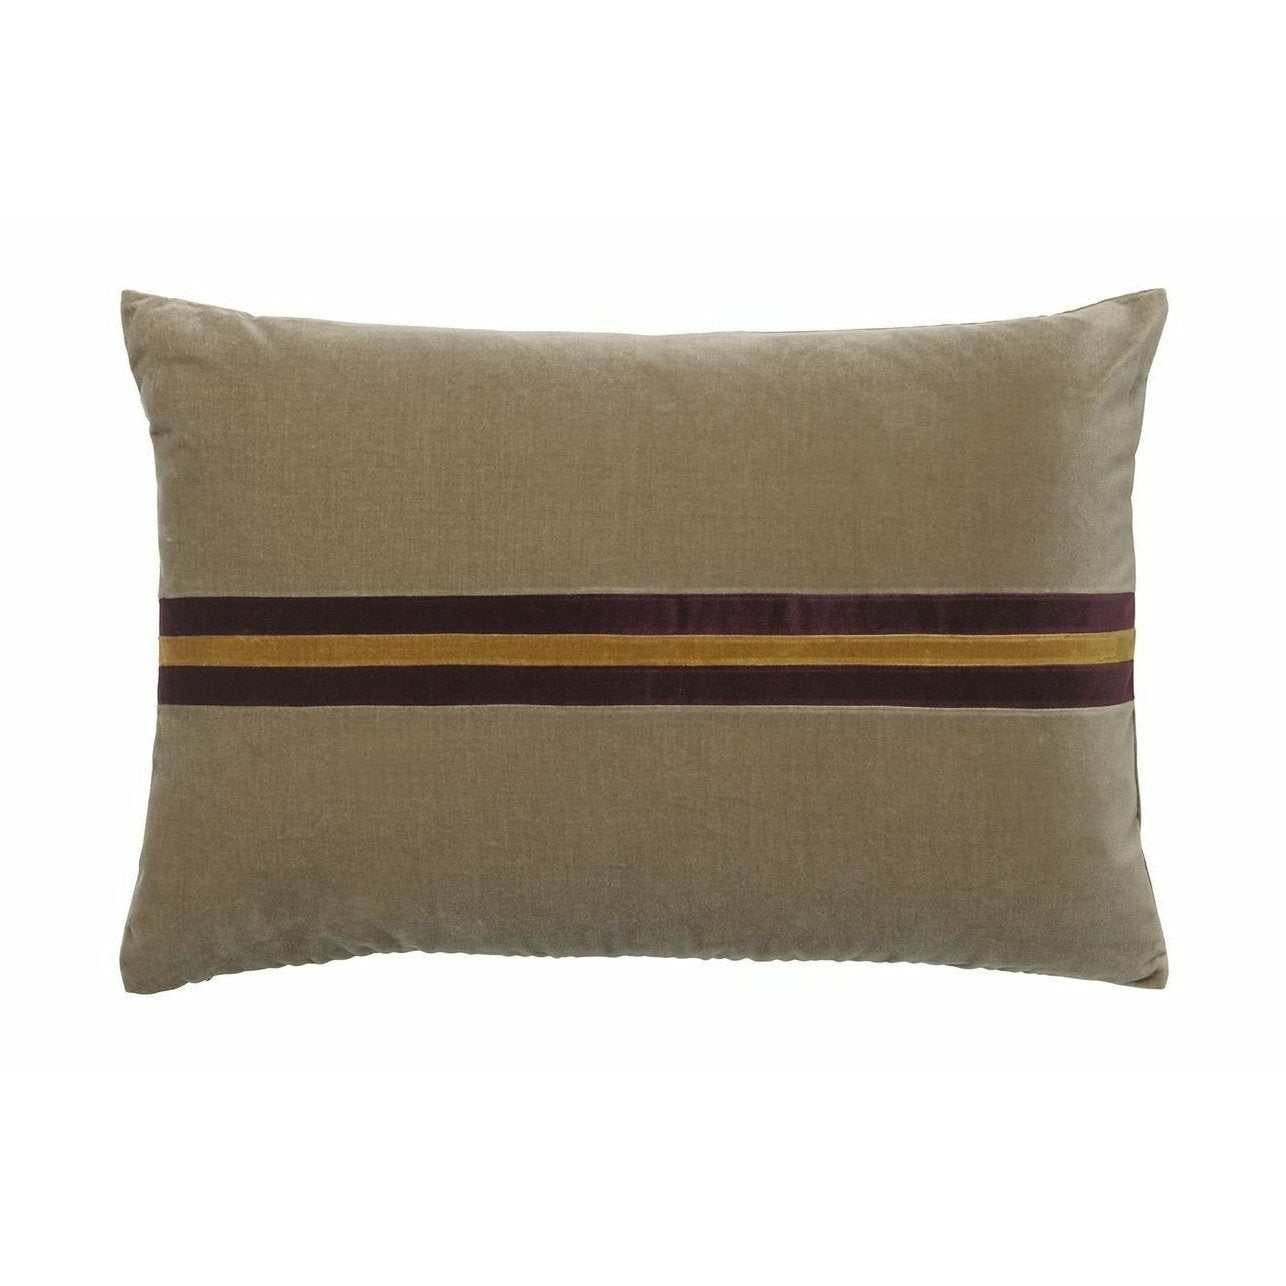 Christina Lundsteen Harlow Velvet Pillow, Taupe/Aubergine/Caramel